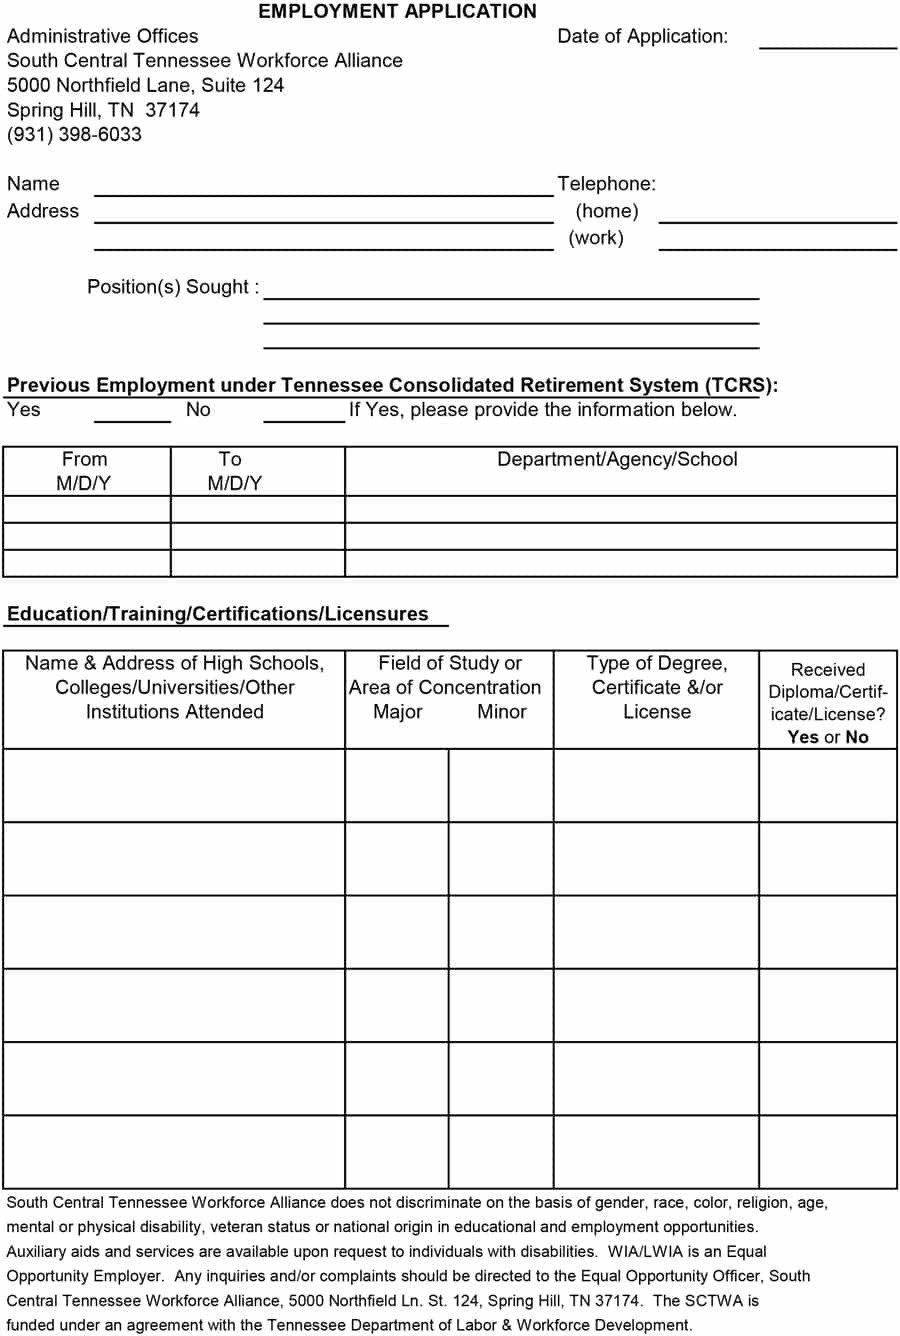 50 Free Employment Job Application Form Templates